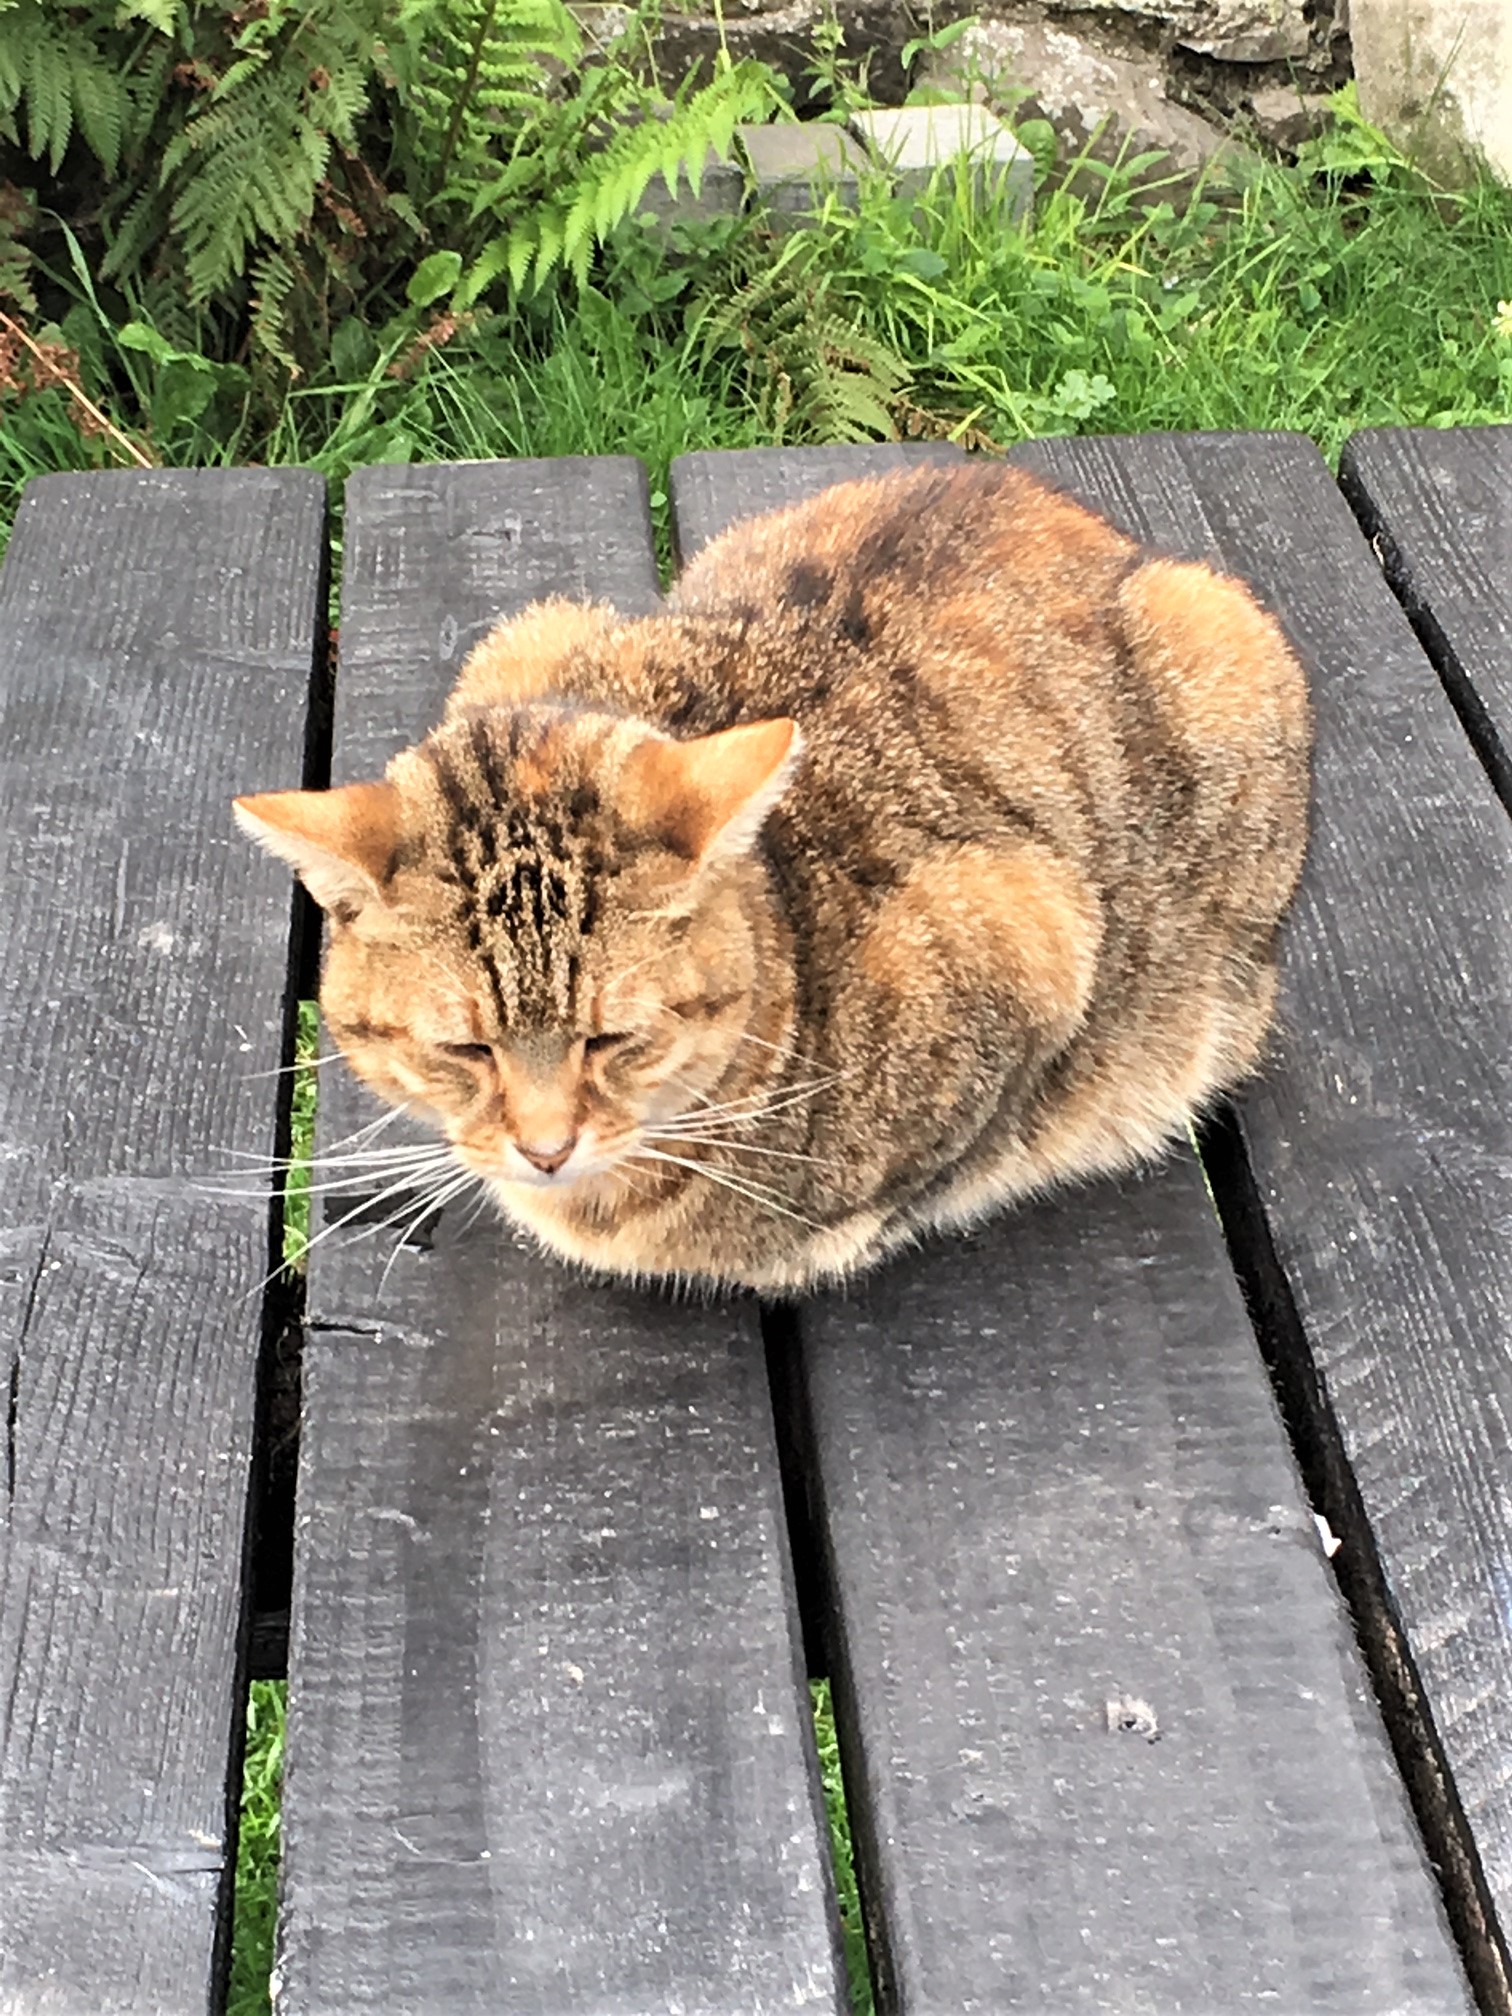 Fat cat on the picnic table in Tara, Ireland